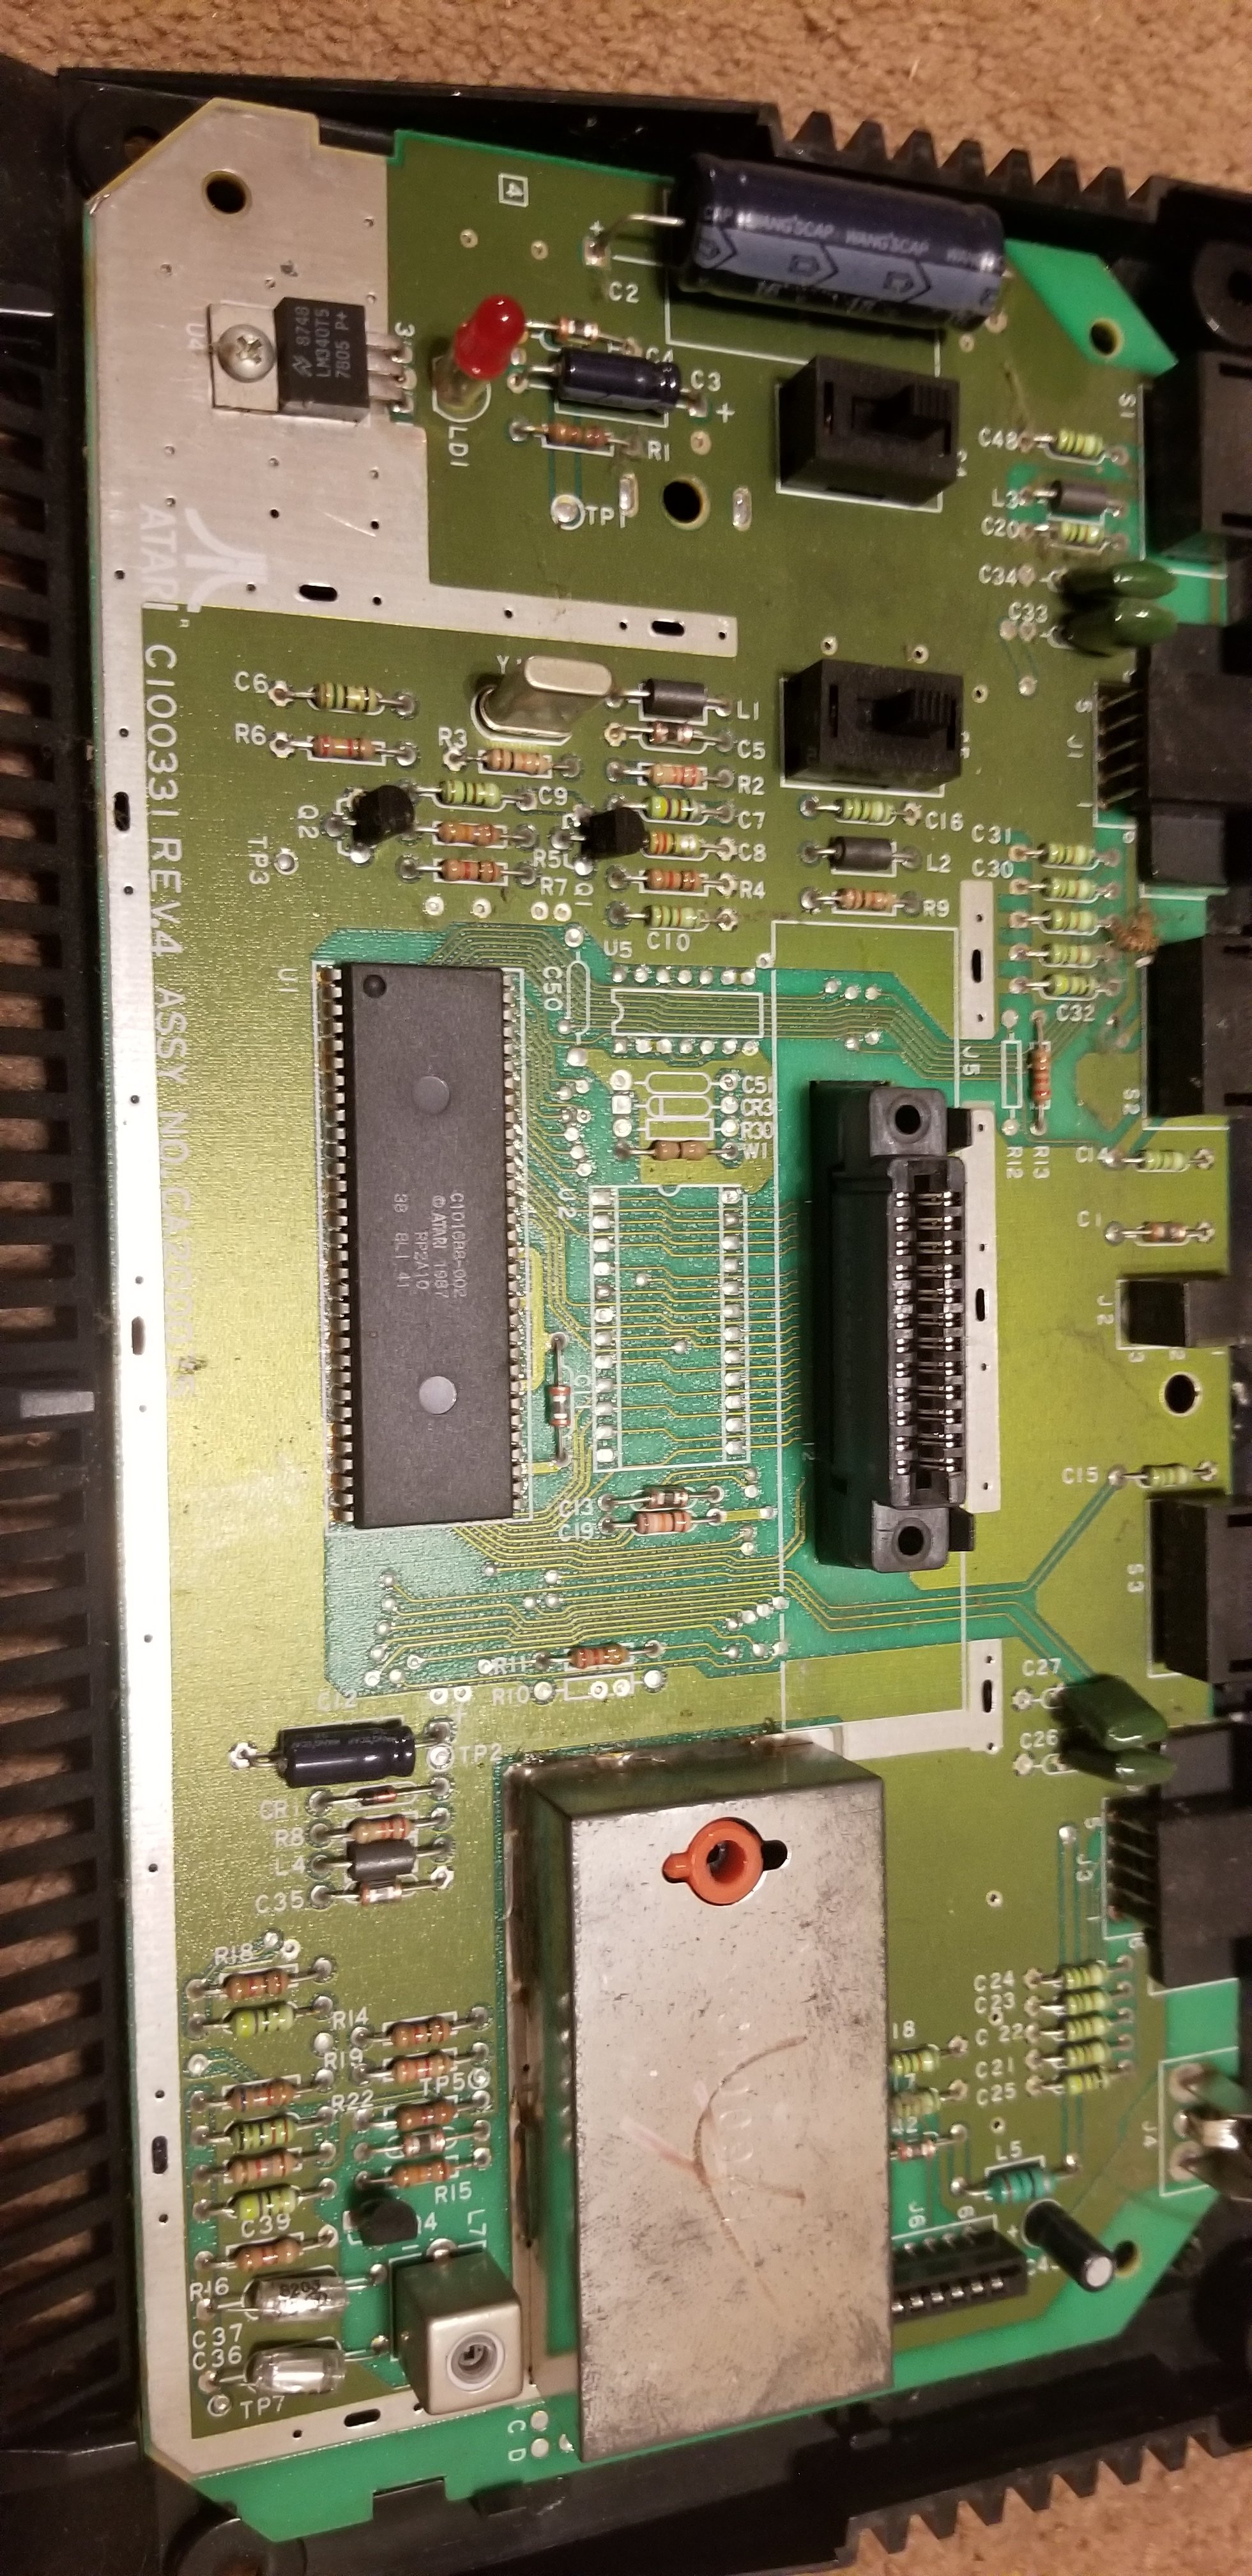 Spotting a single chip Atari - Atari 2600 - AtariAge Forums
